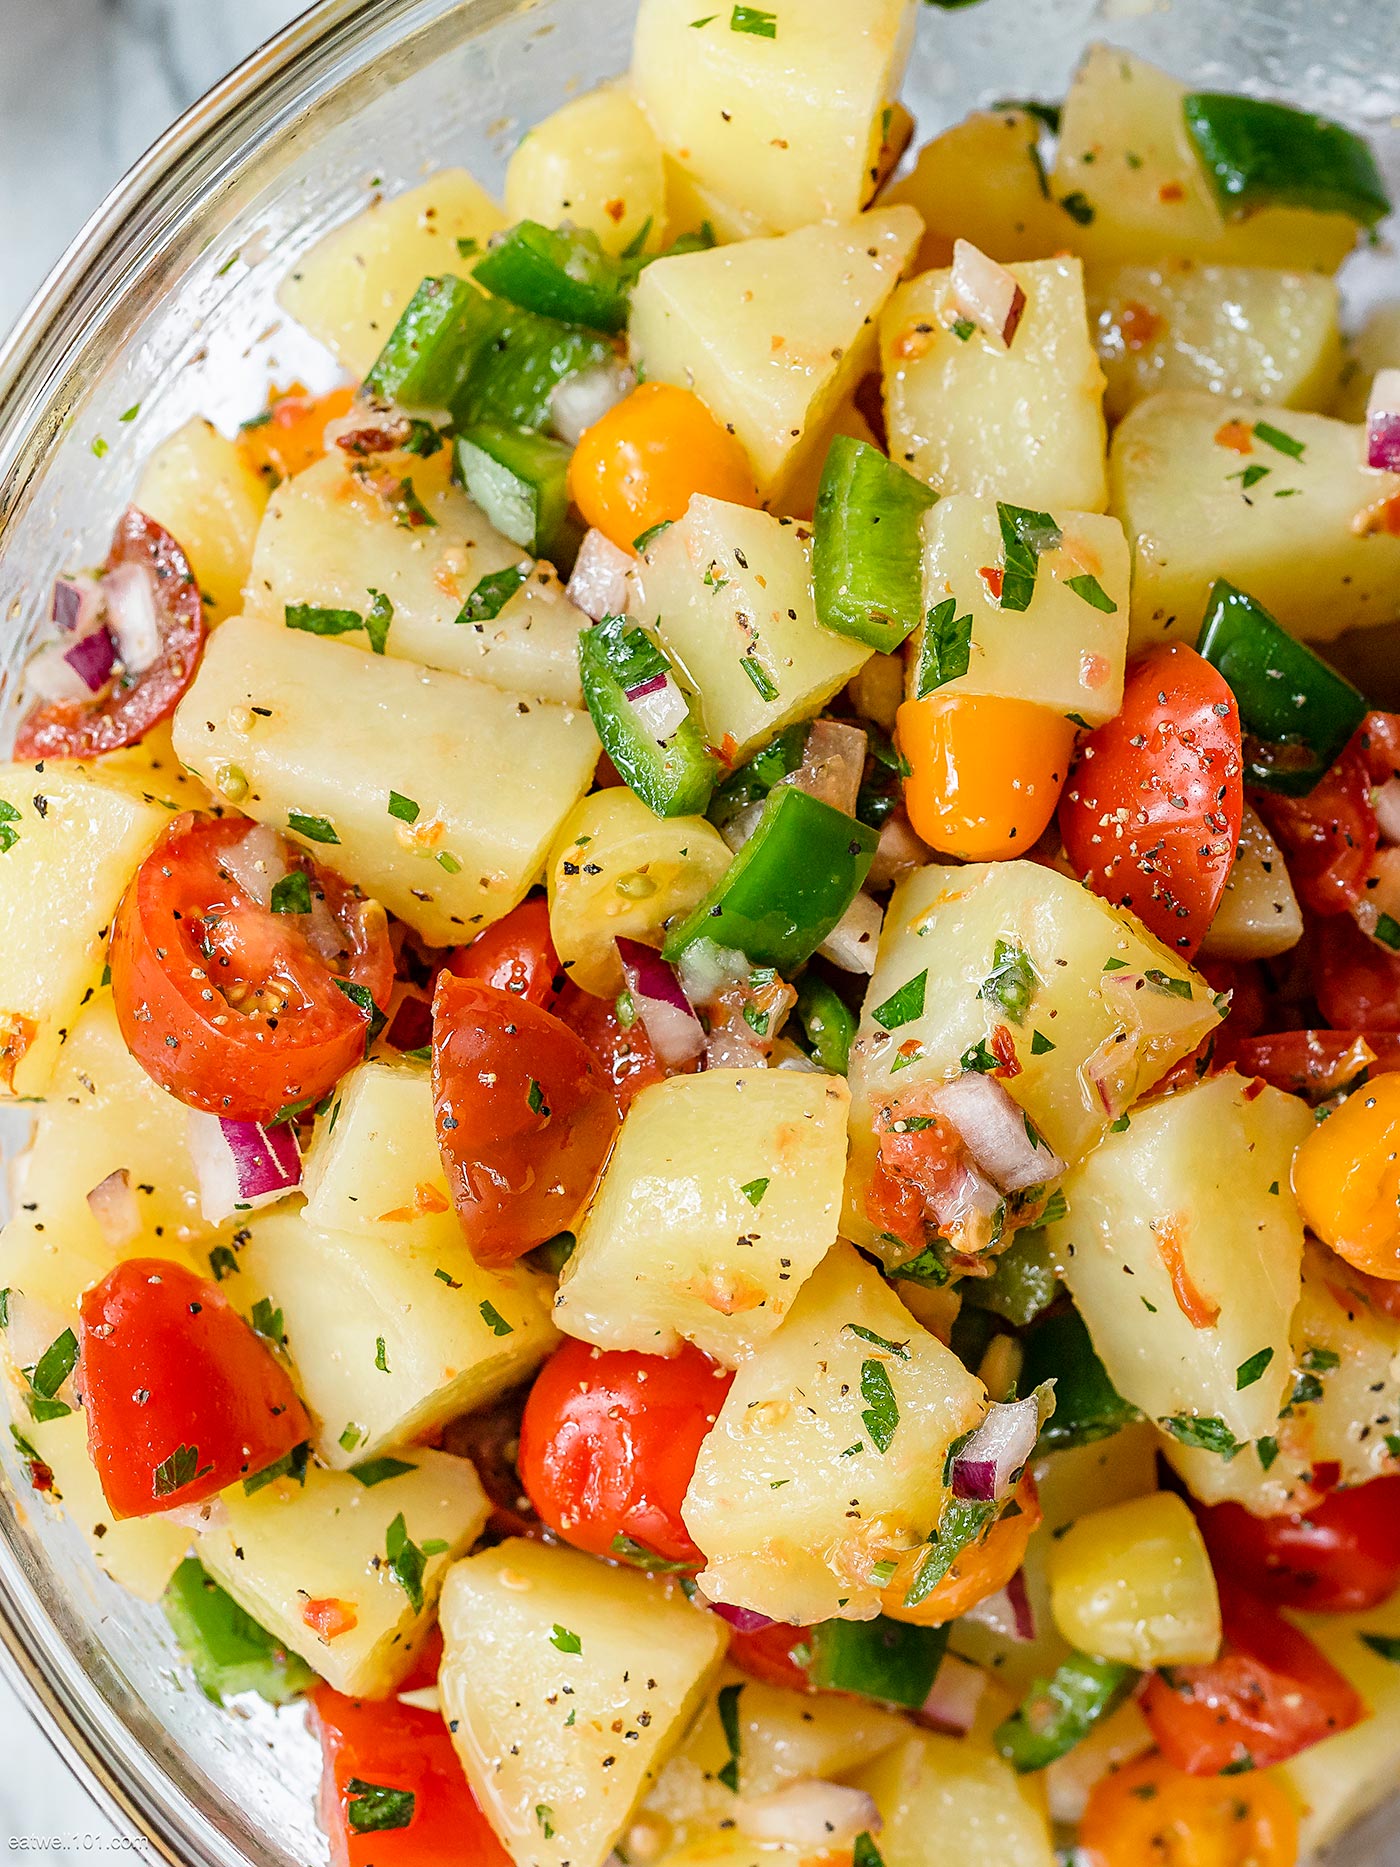 Simple Potato Salad Recipe